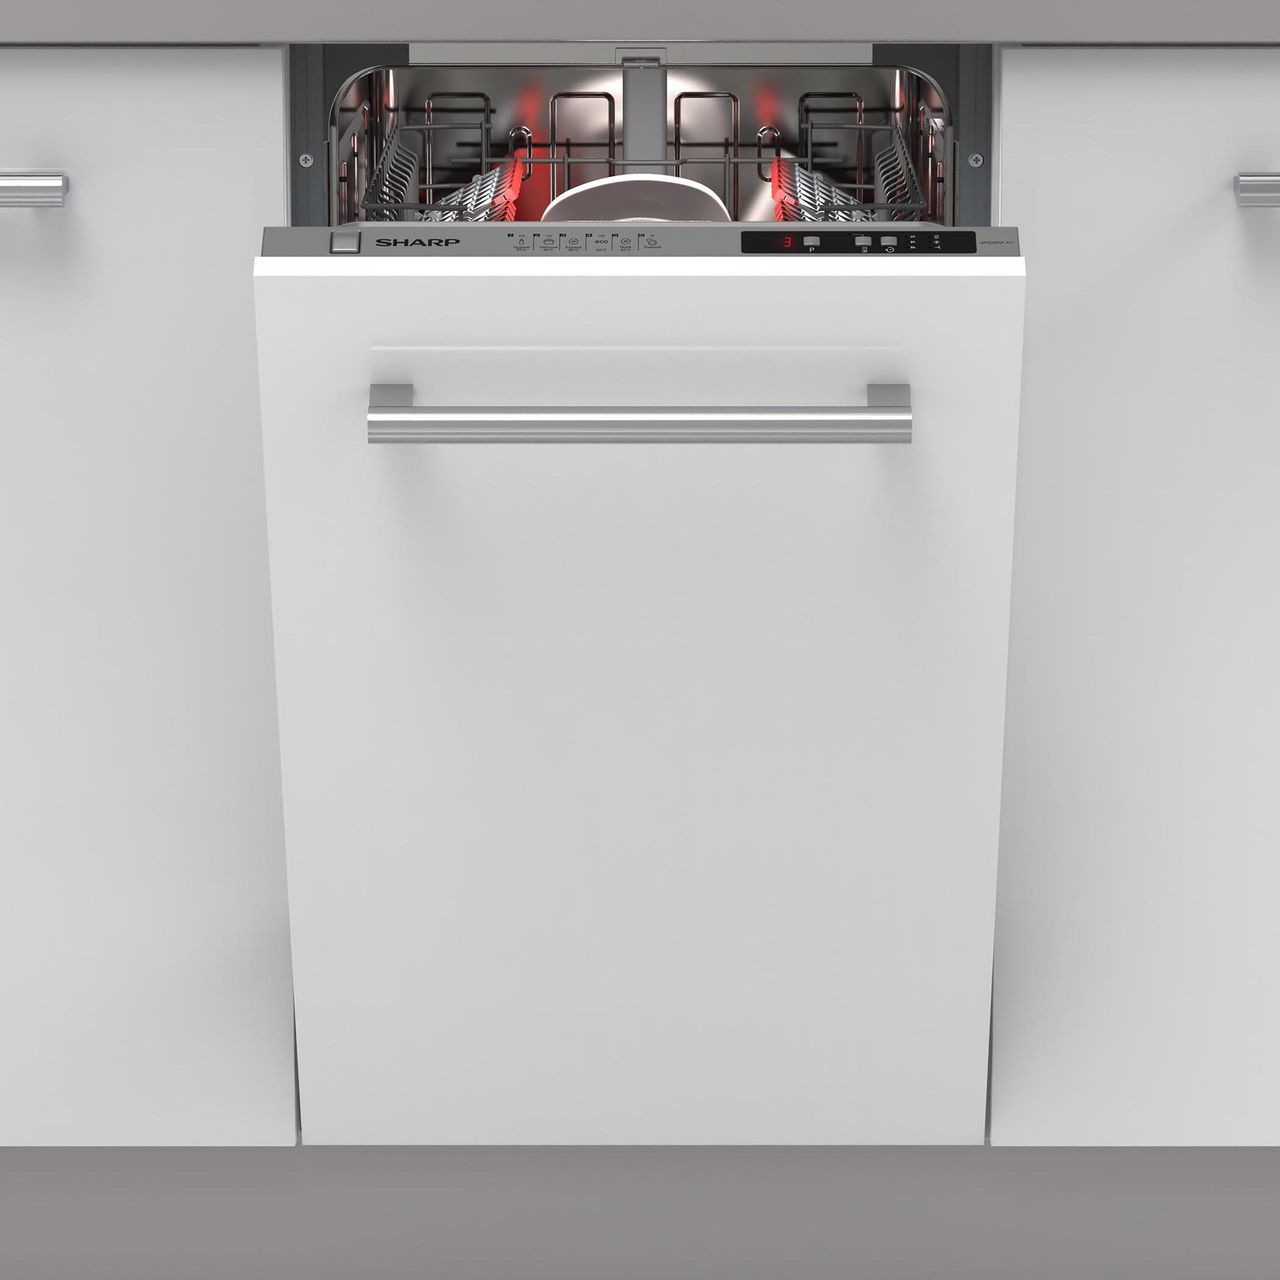 Sharp QW-S22I492X-EN Fully Integrated Slimline Dishwasher Review